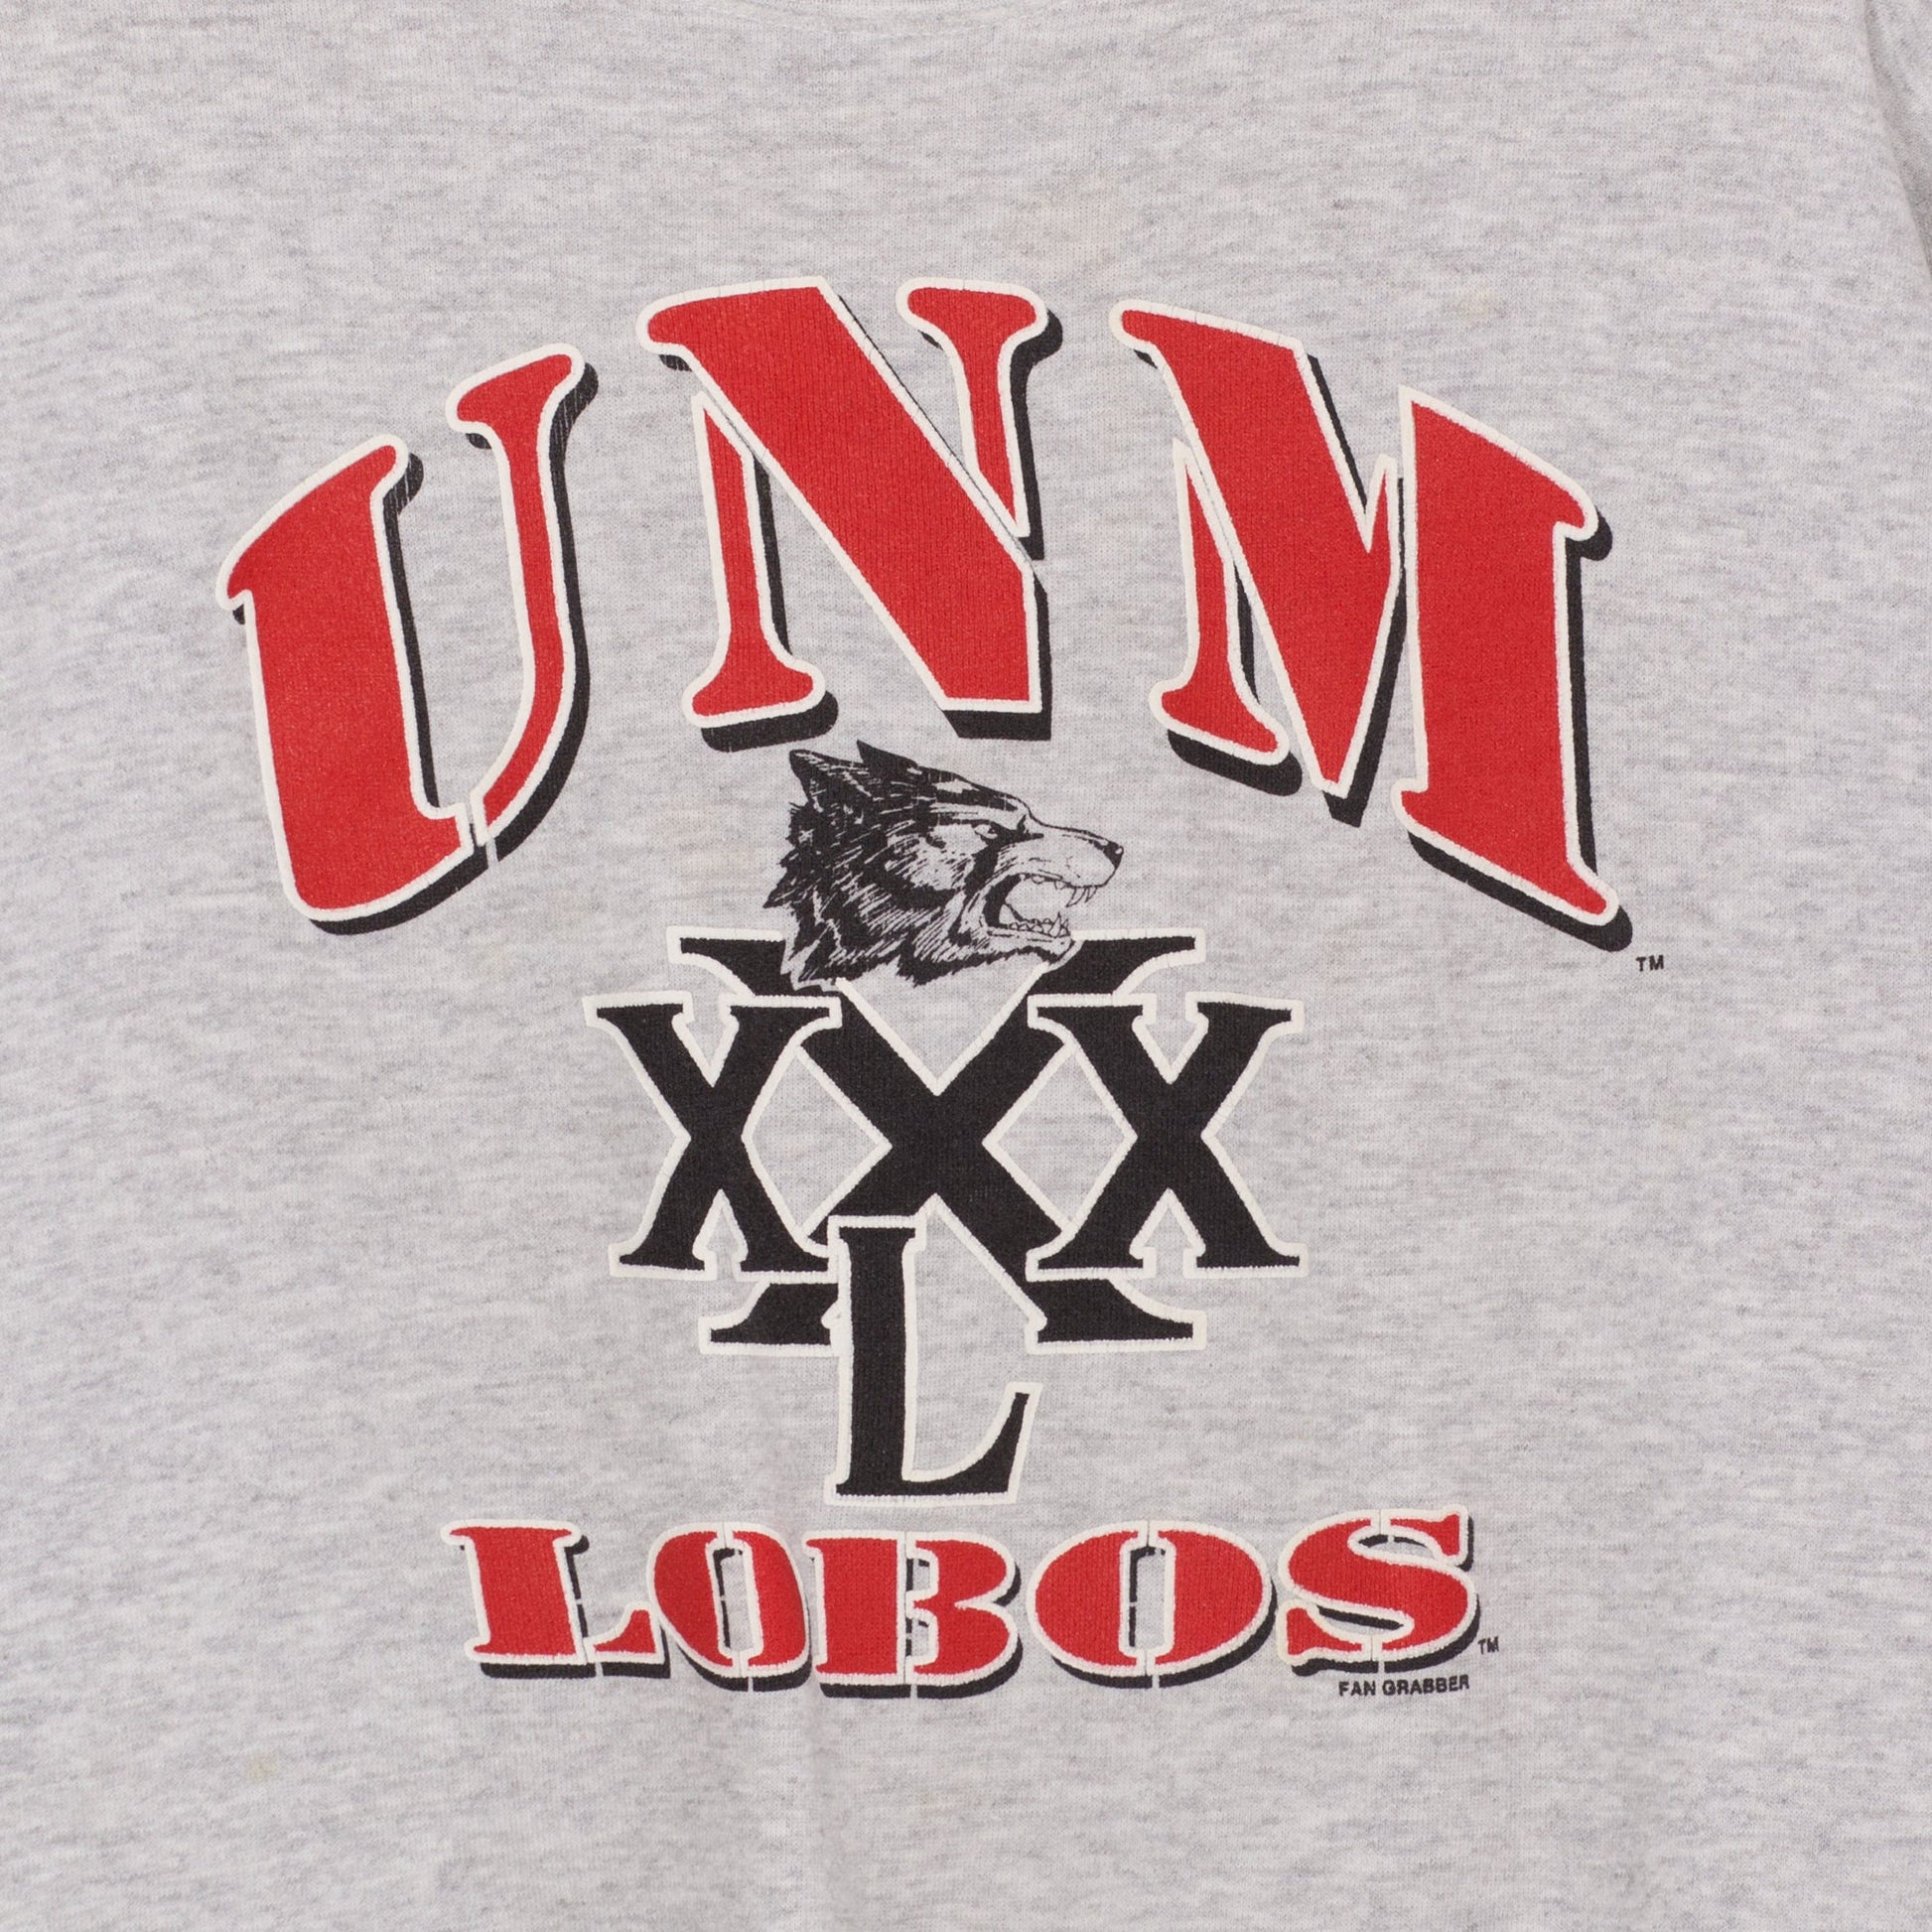 Medium 90s University Of New Mexico Lobos Sweatshirt | Vintage Heather Grey Collegiate Graphic Crewneck